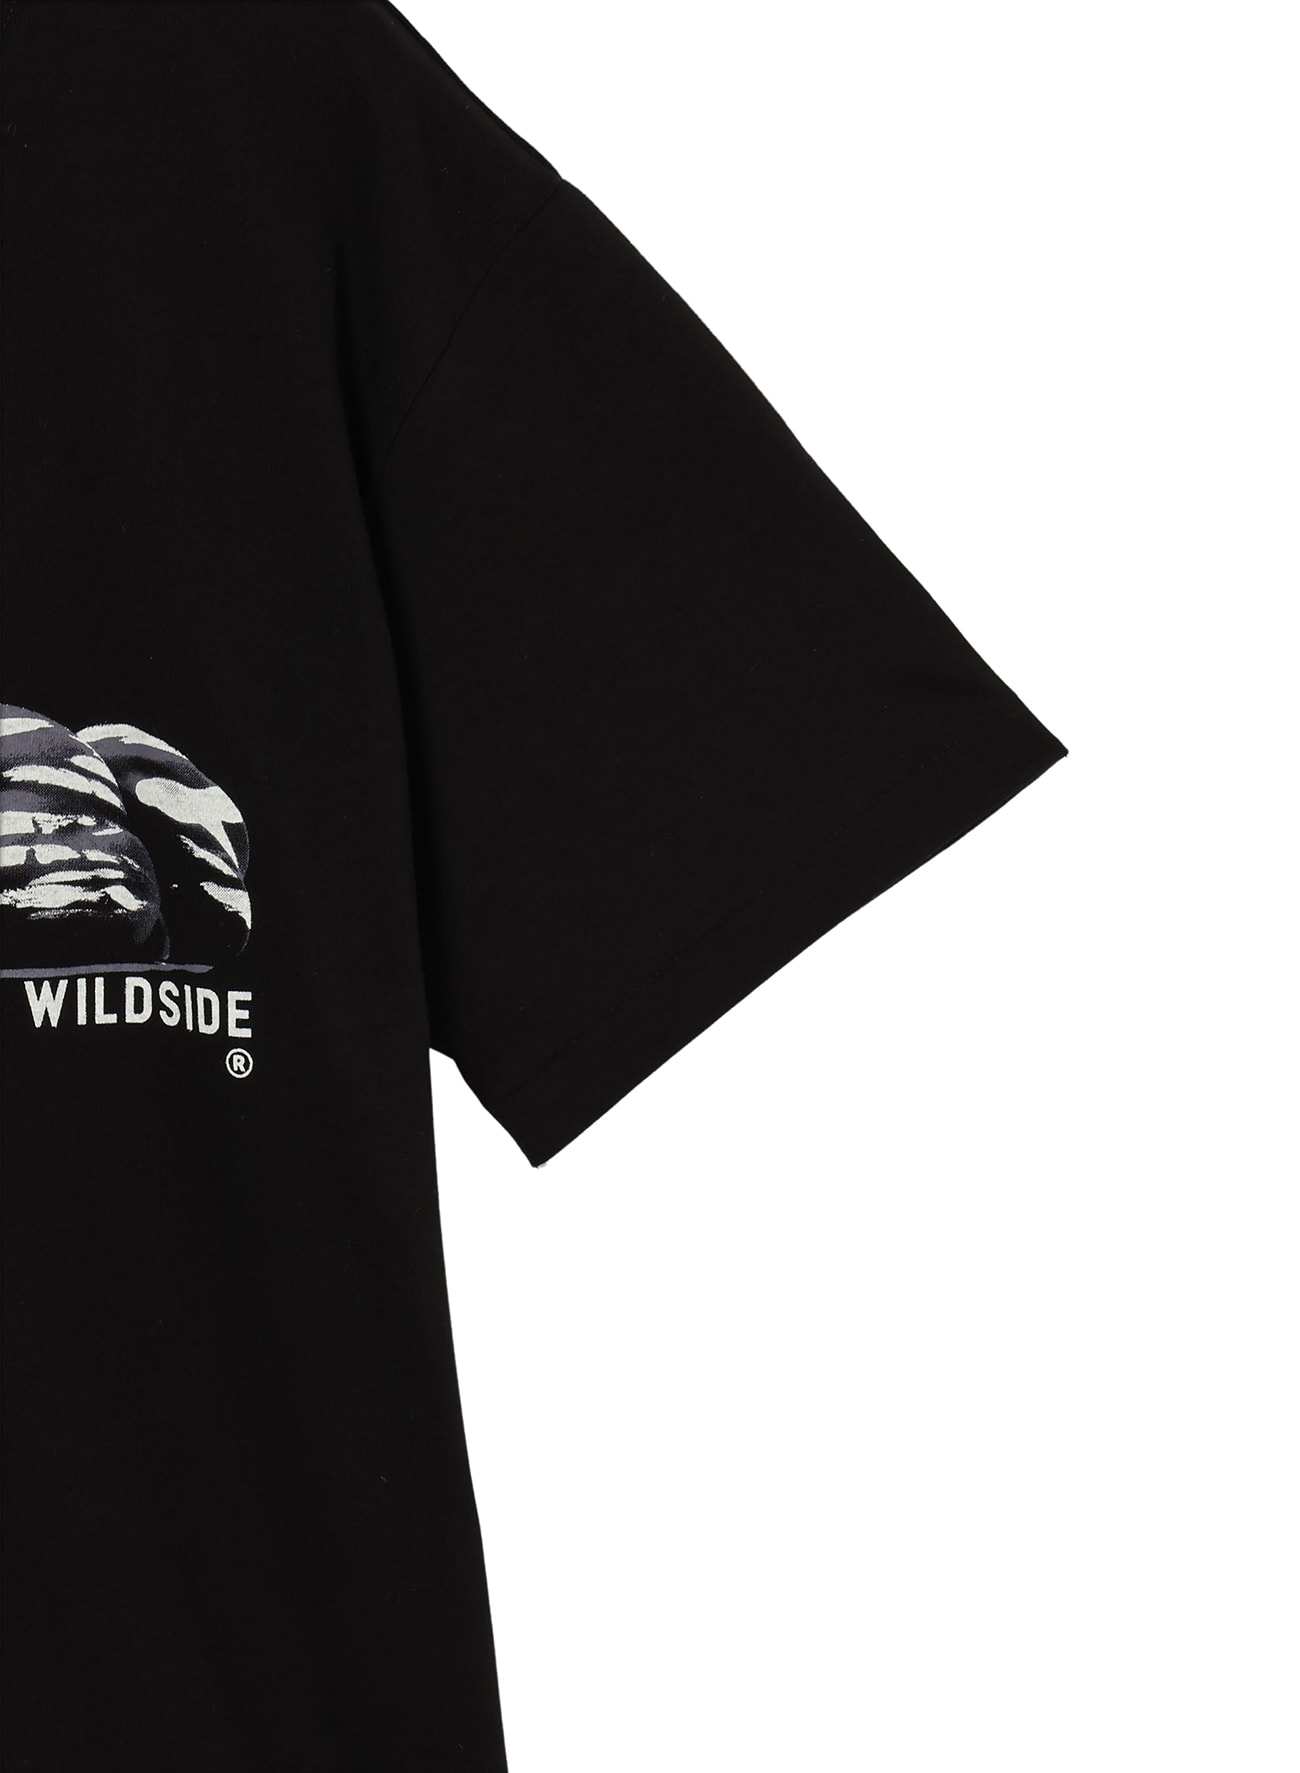 WILDSIDE×天野タケル Collaboration T-shirt